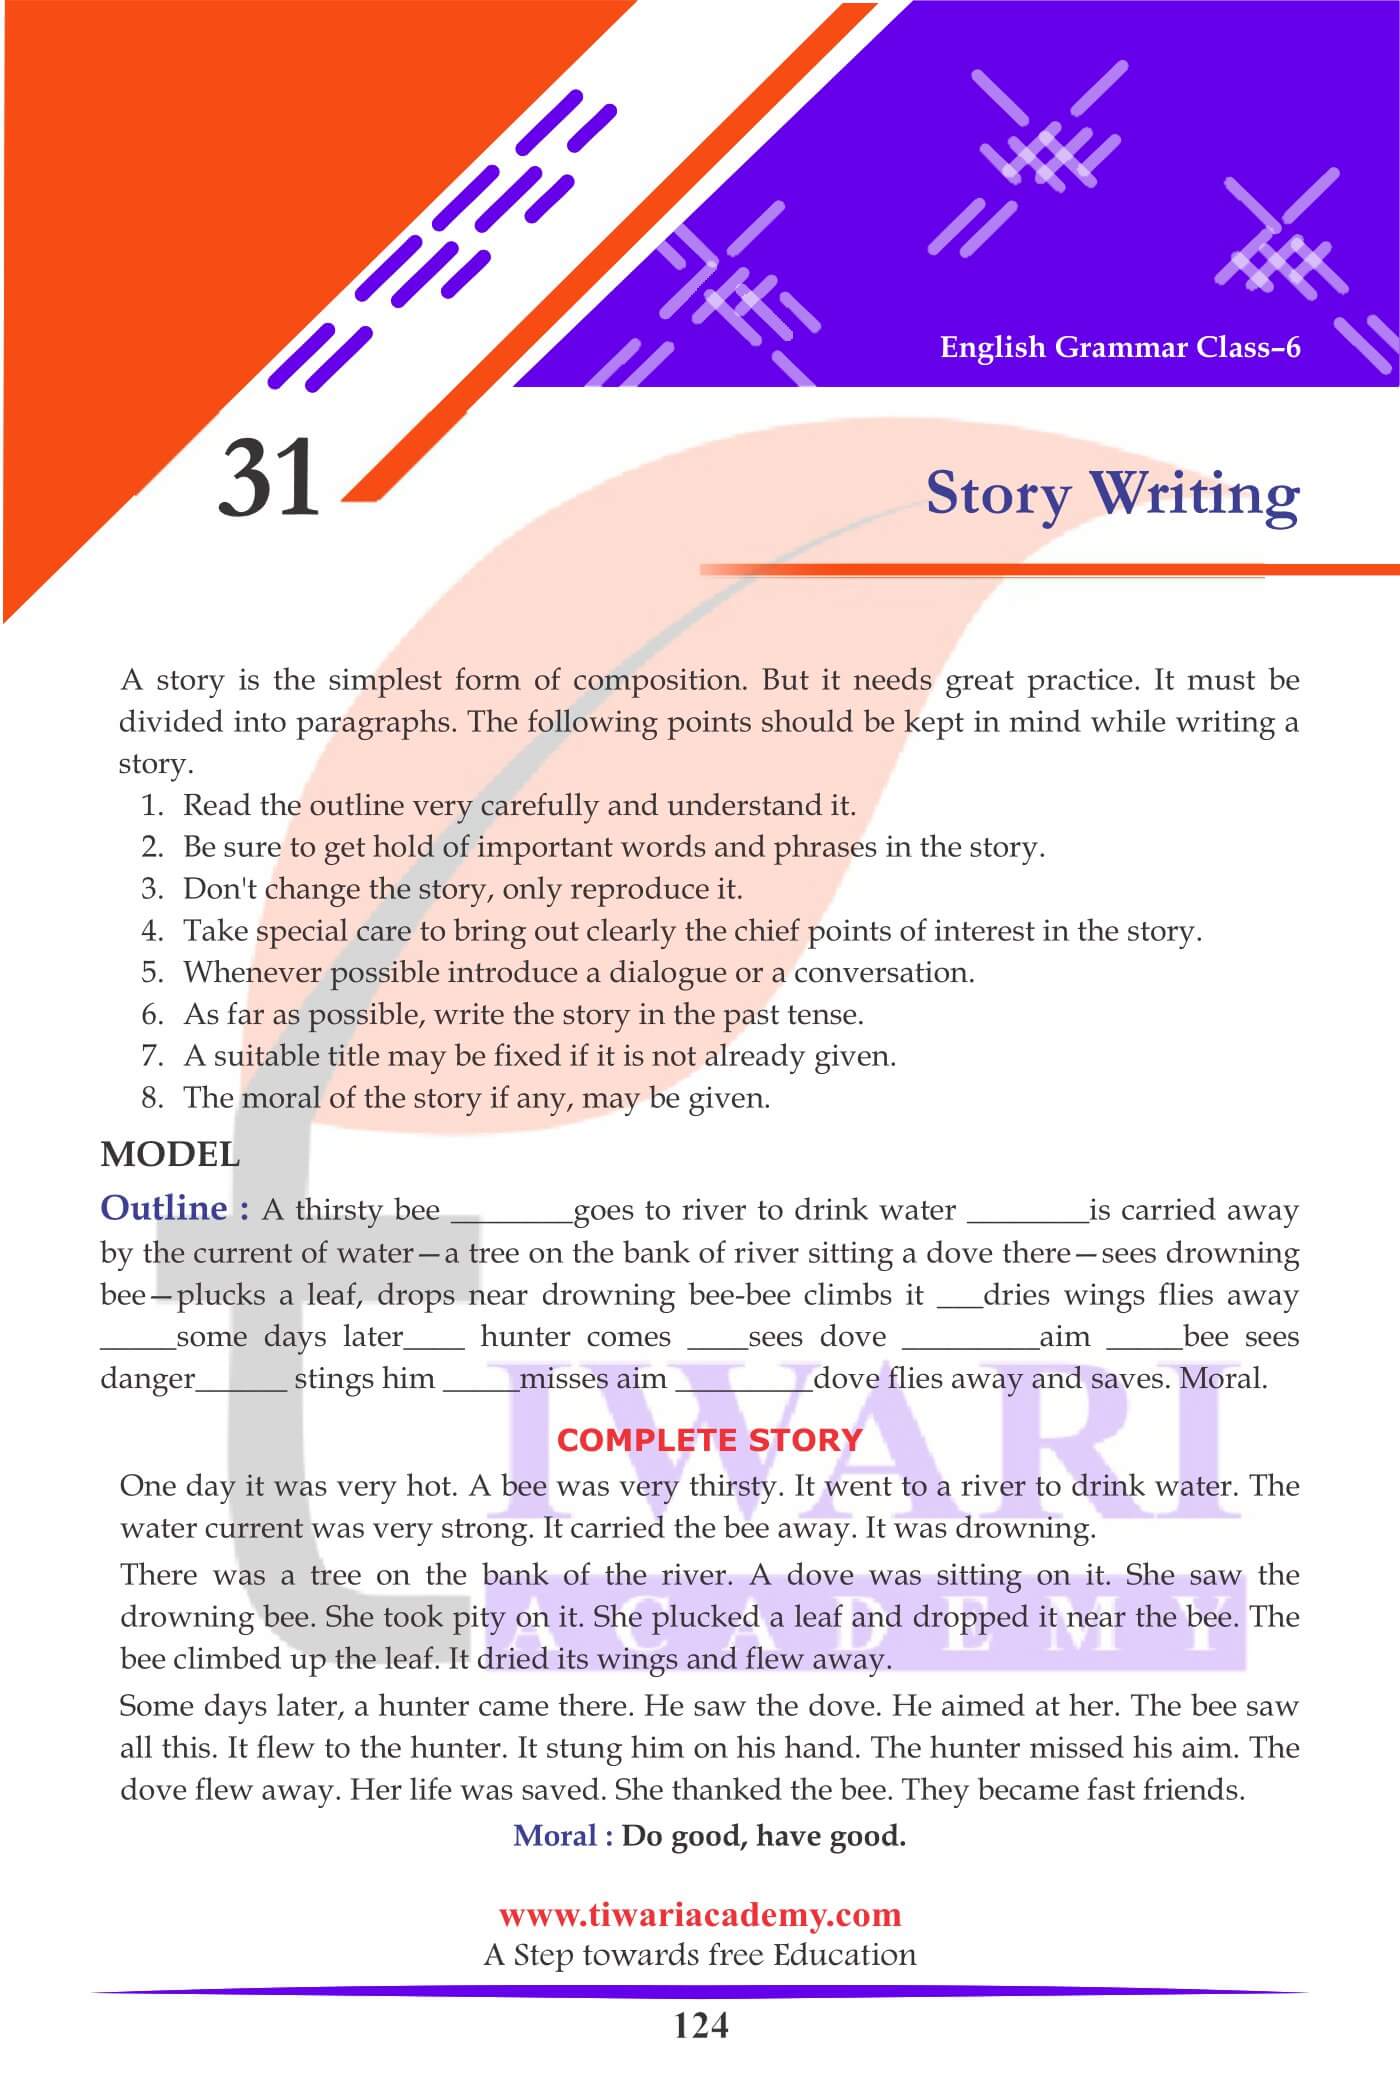 Class 6 English Grammar Chapter 31 Story Writing